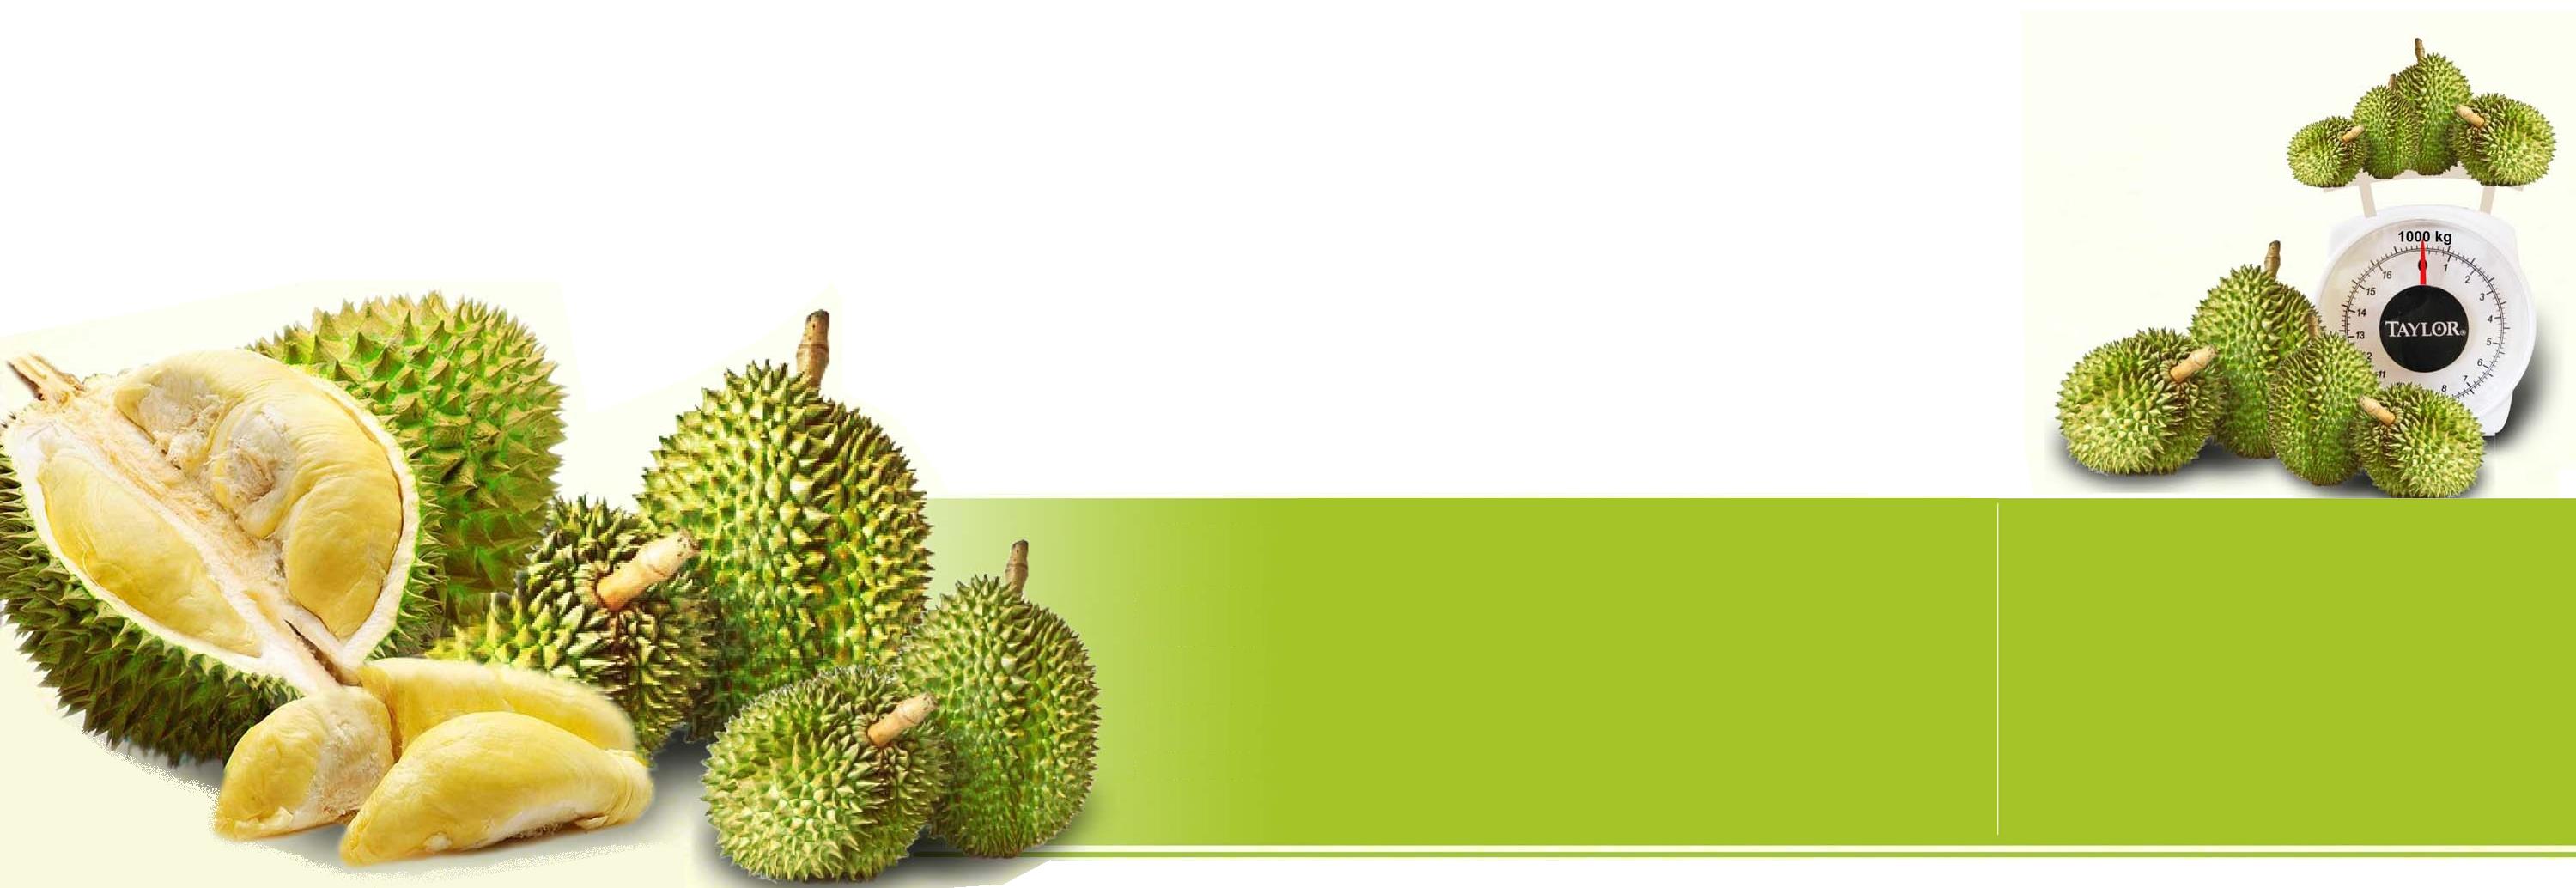 durian king